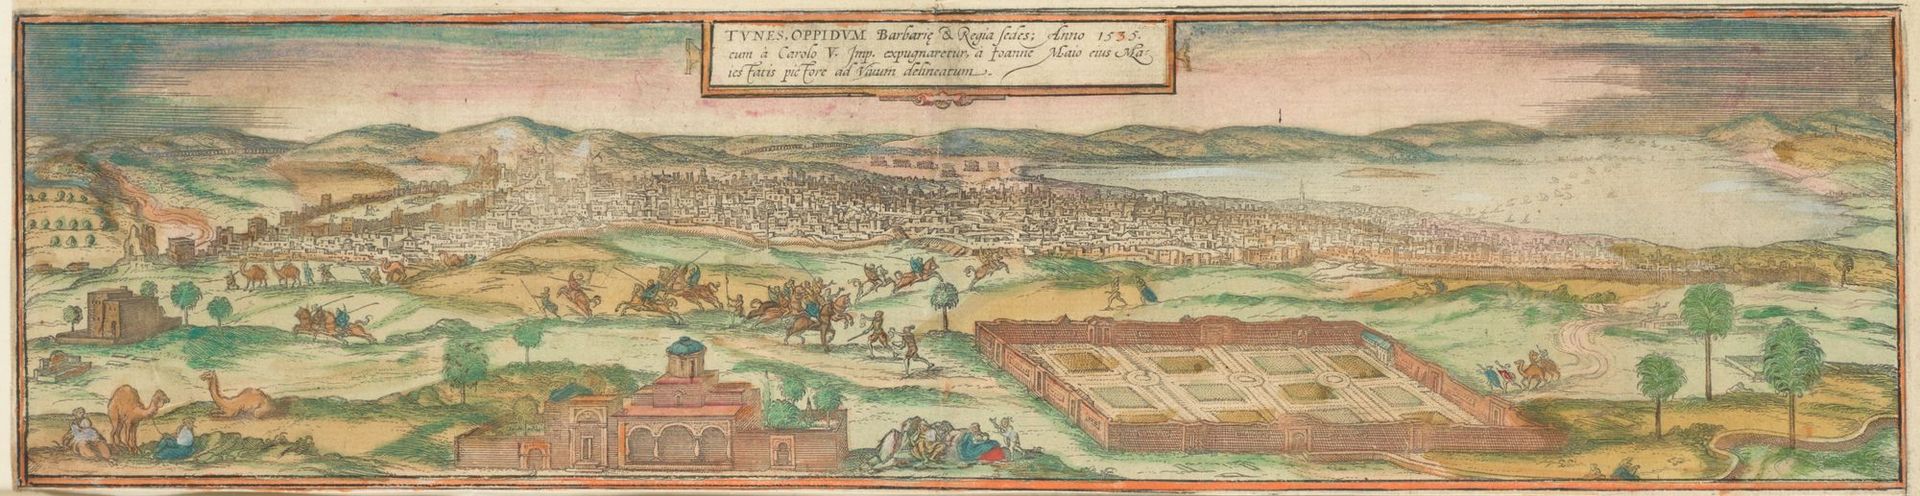 FRANZ HOGENBERGH (1540 / 1592) "Takeover of Tunisia by Charles V" Kupferstich na&hellip;